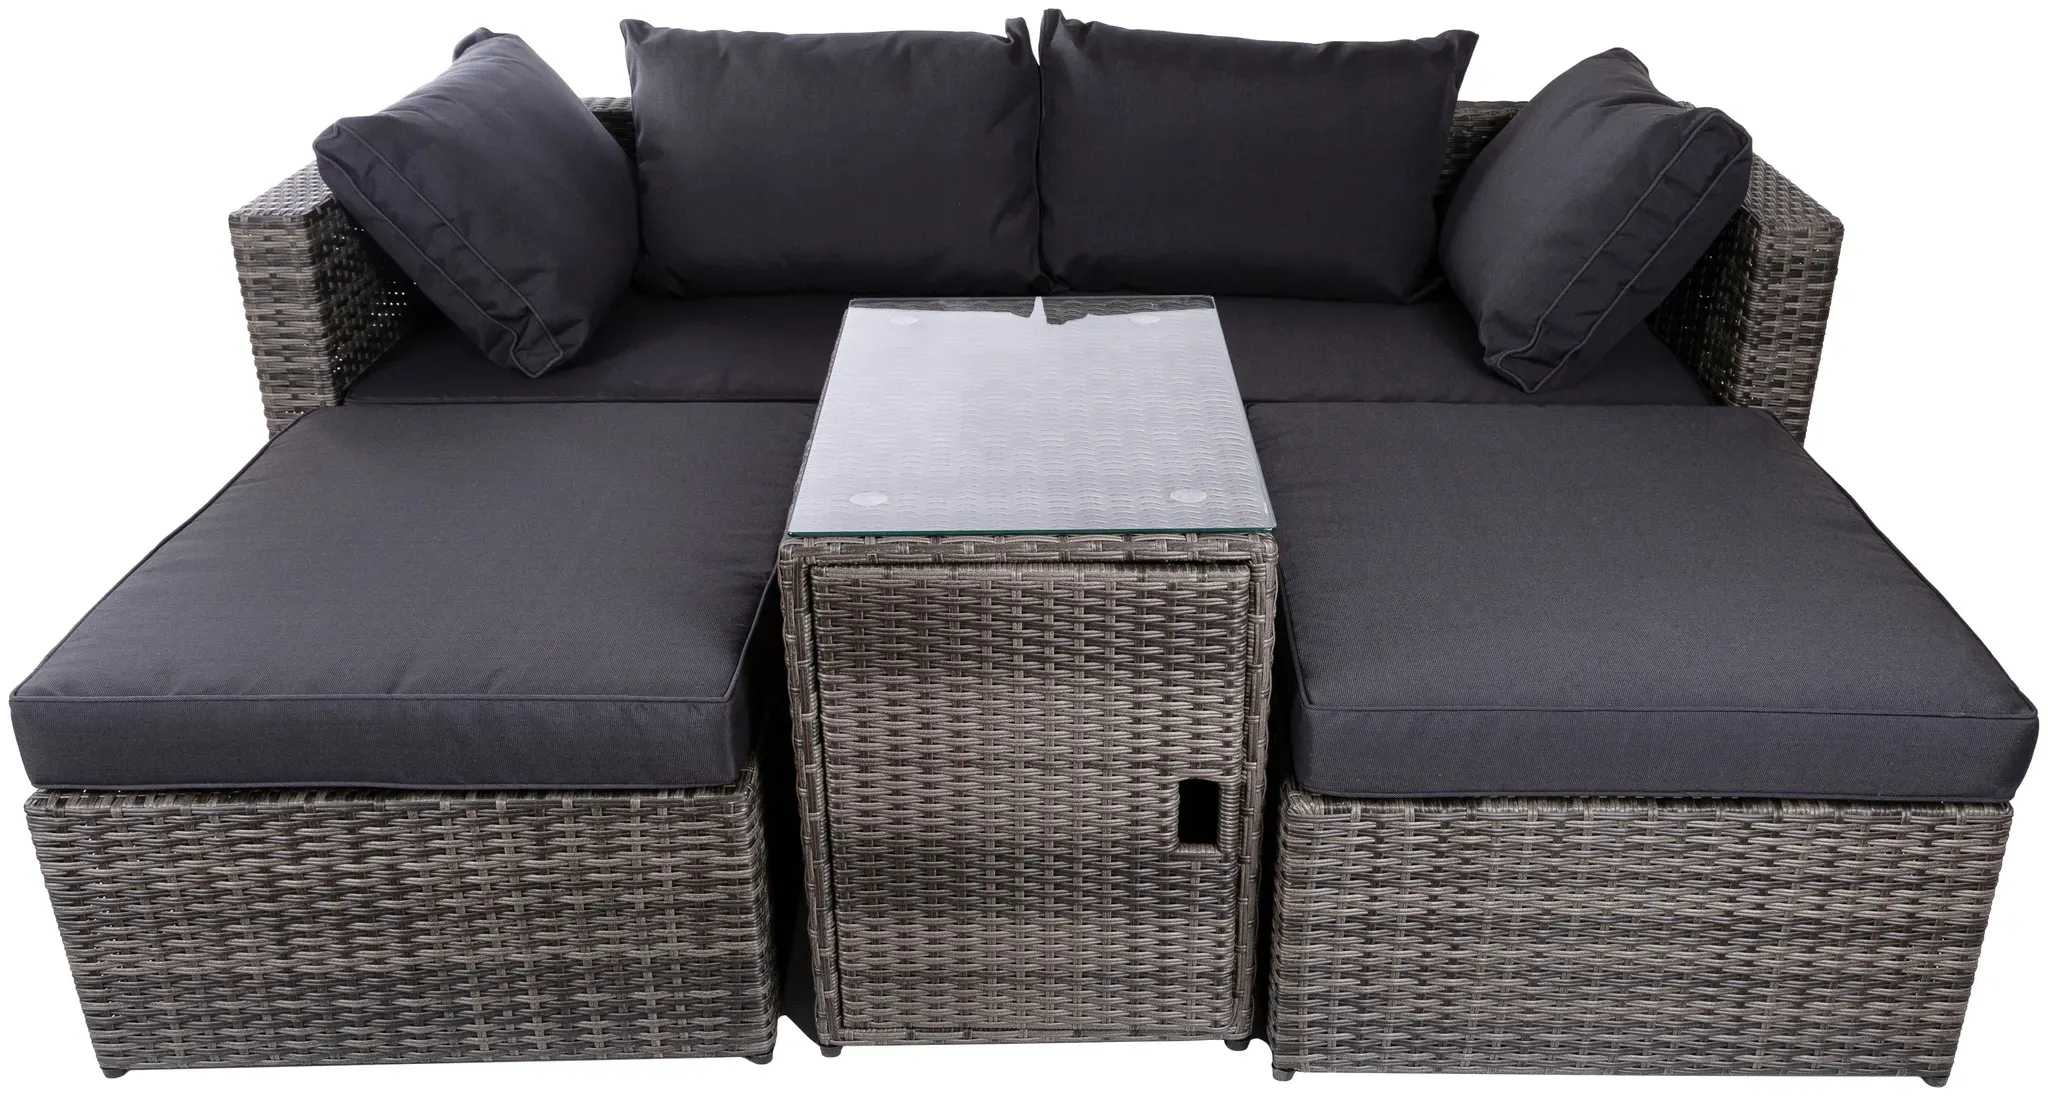 Gartenlounge-Set MY FLAIR Sitzmöbel-Sets grau (grau, grau, grau) Outdoor Möbel 2 Sofa, Hocker, 1 Tisch